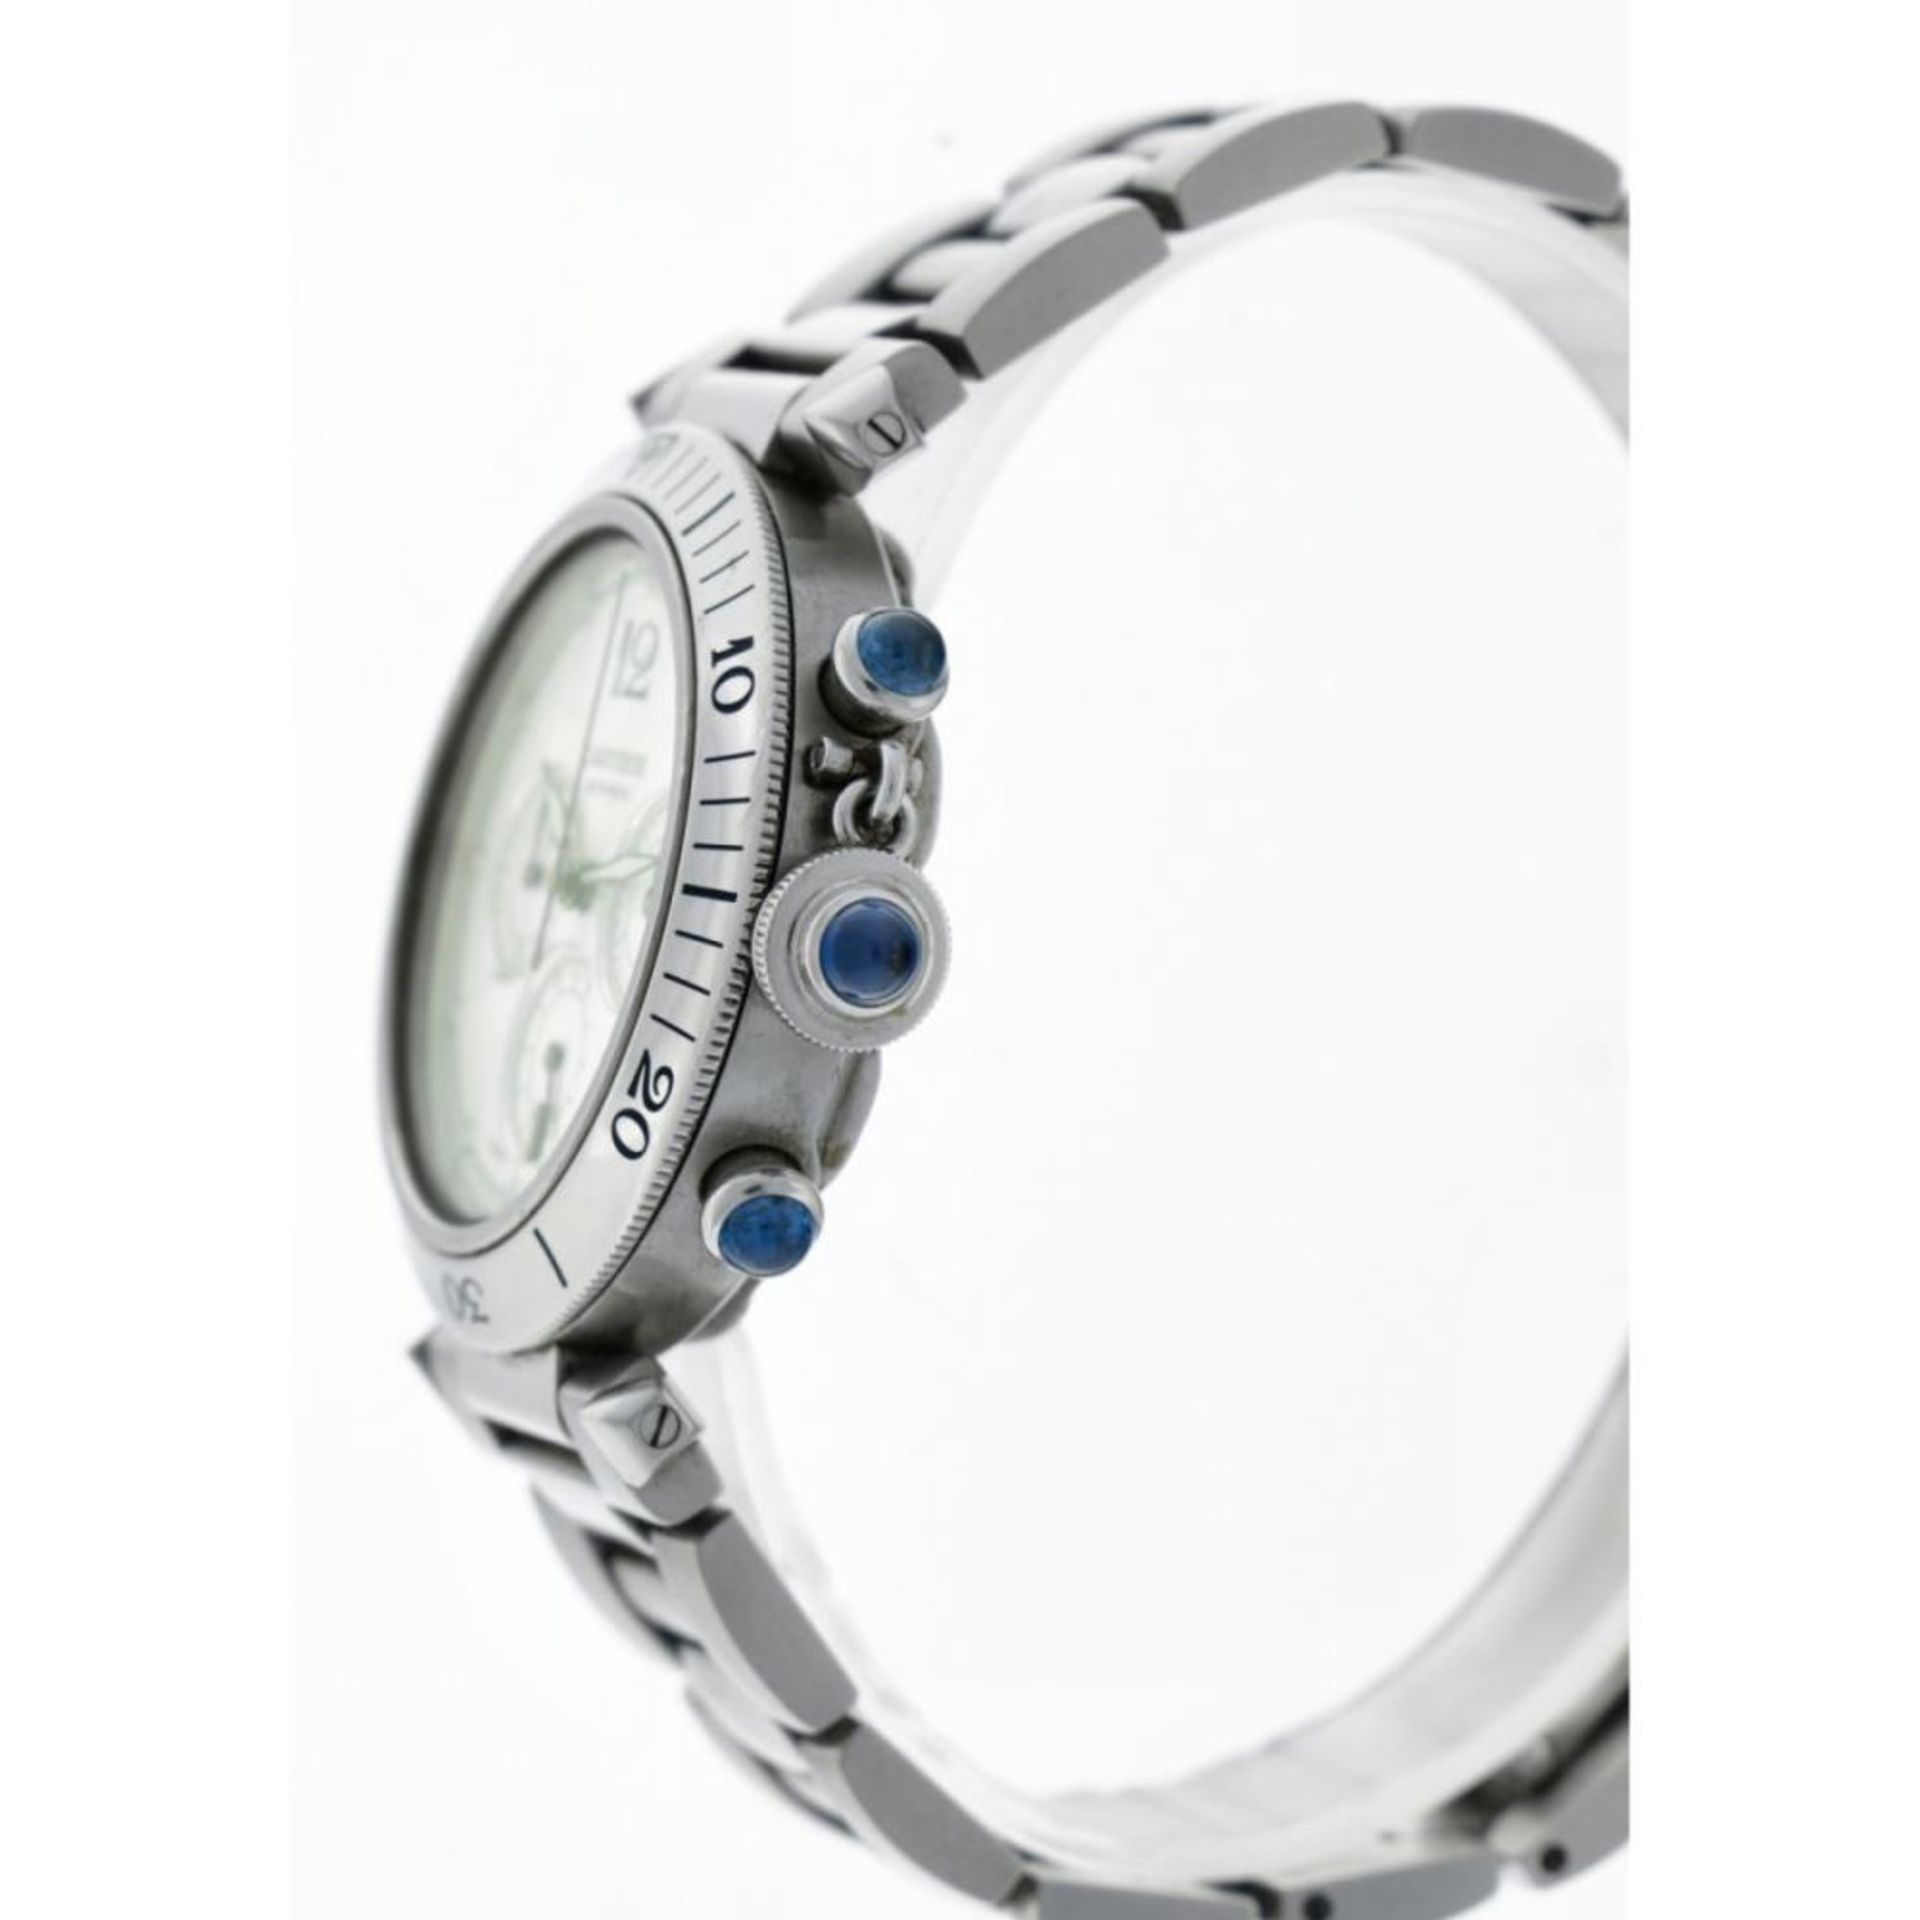 Cartier Pasha 2113 - Men's watch - approx. 2010. - Image 9 of 12